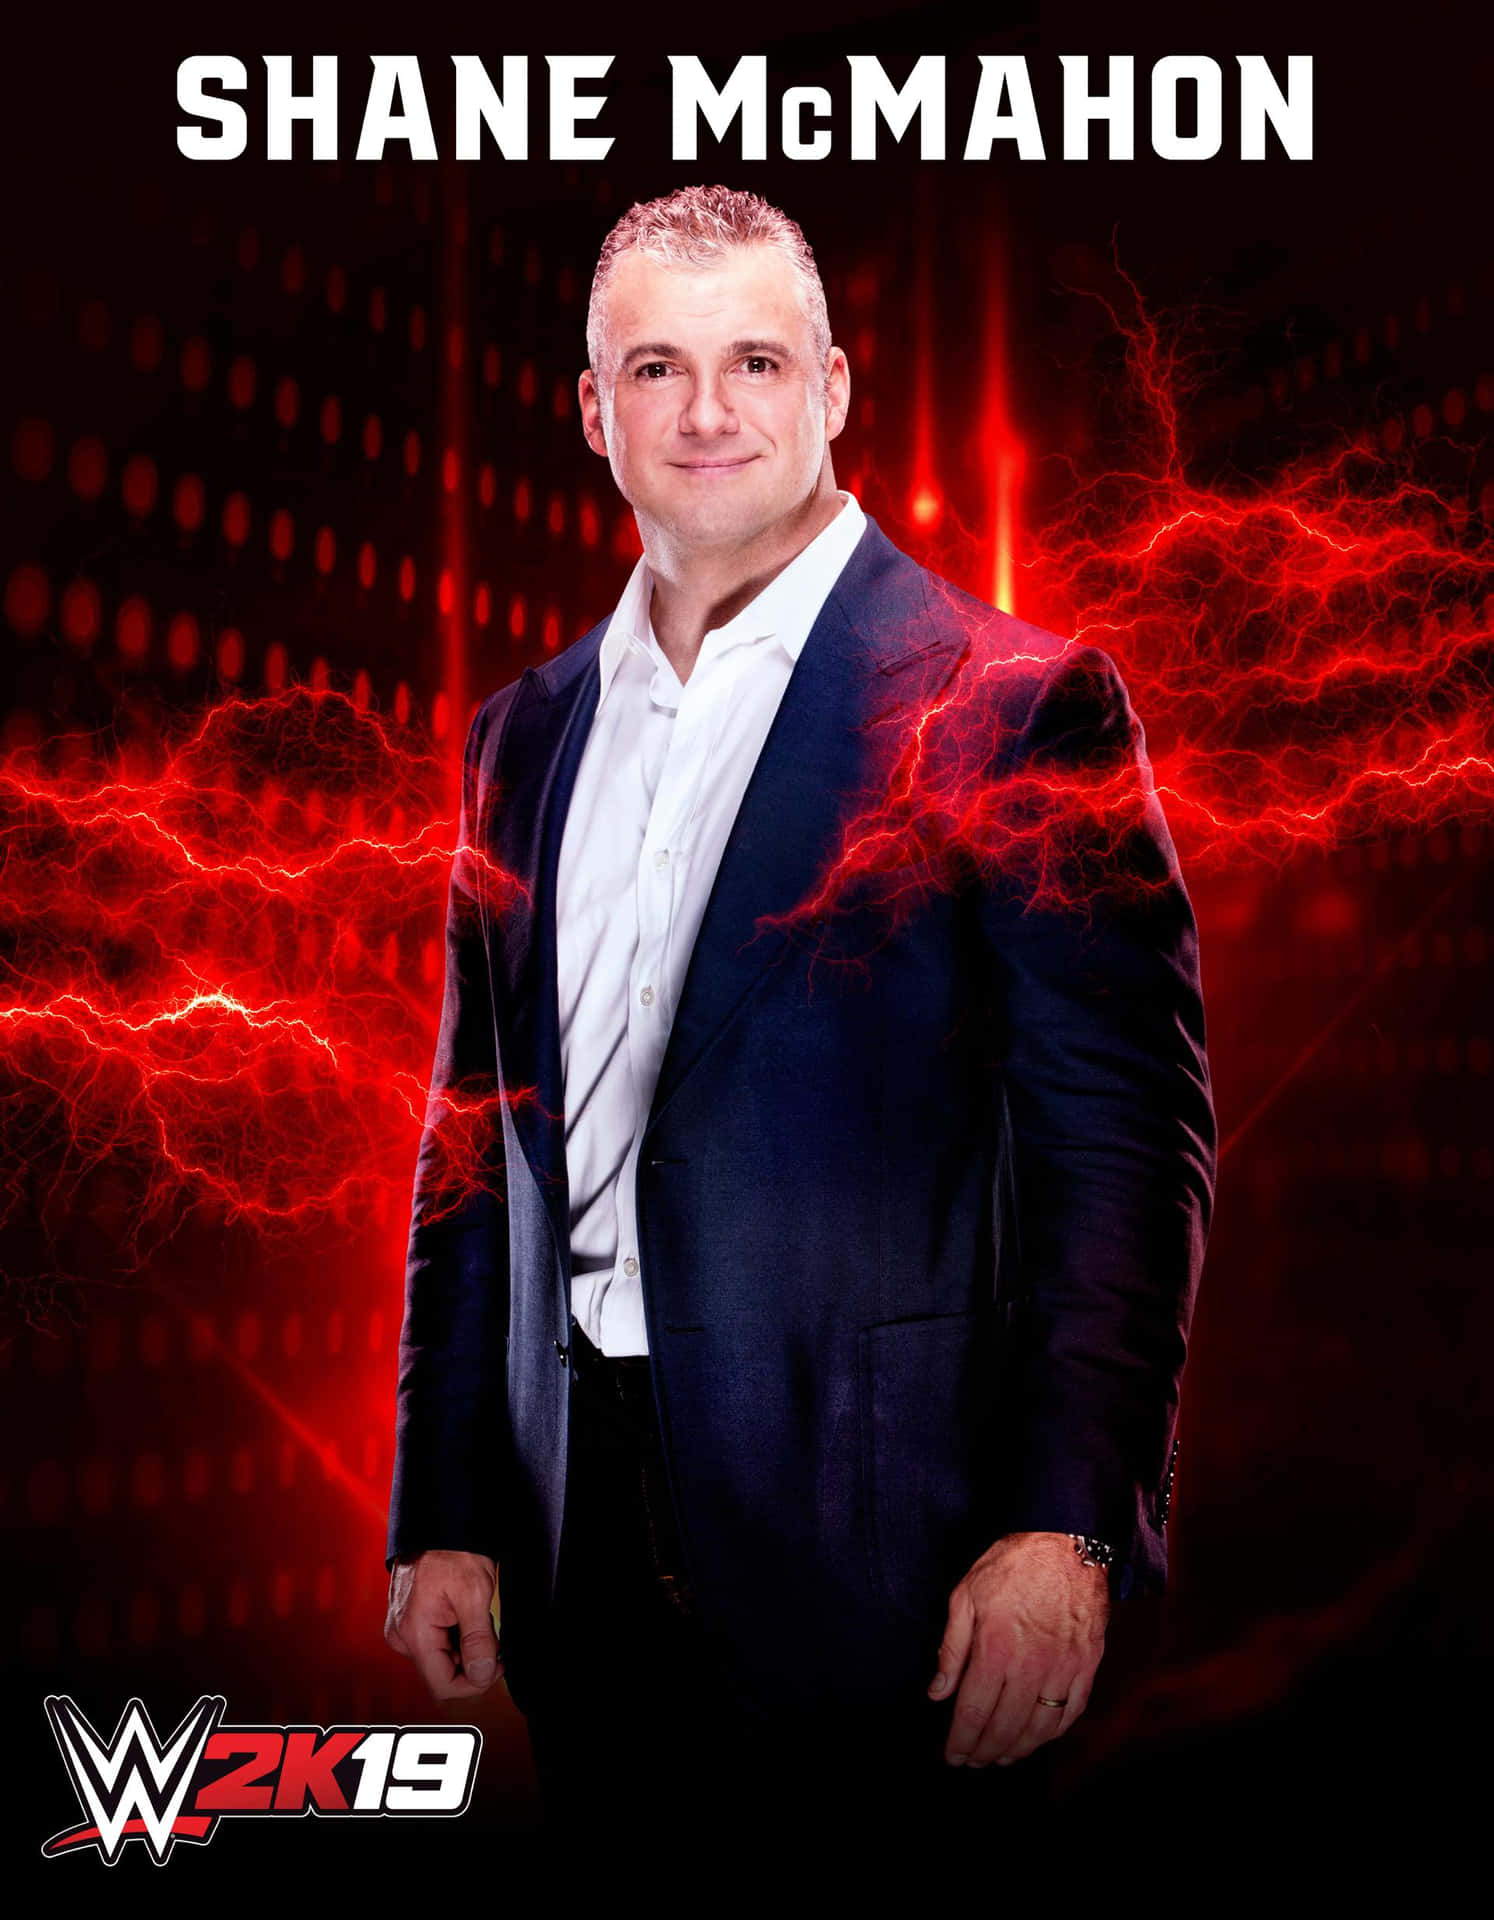 Shane McMahon WWE 2k19 Poster Wallpaper